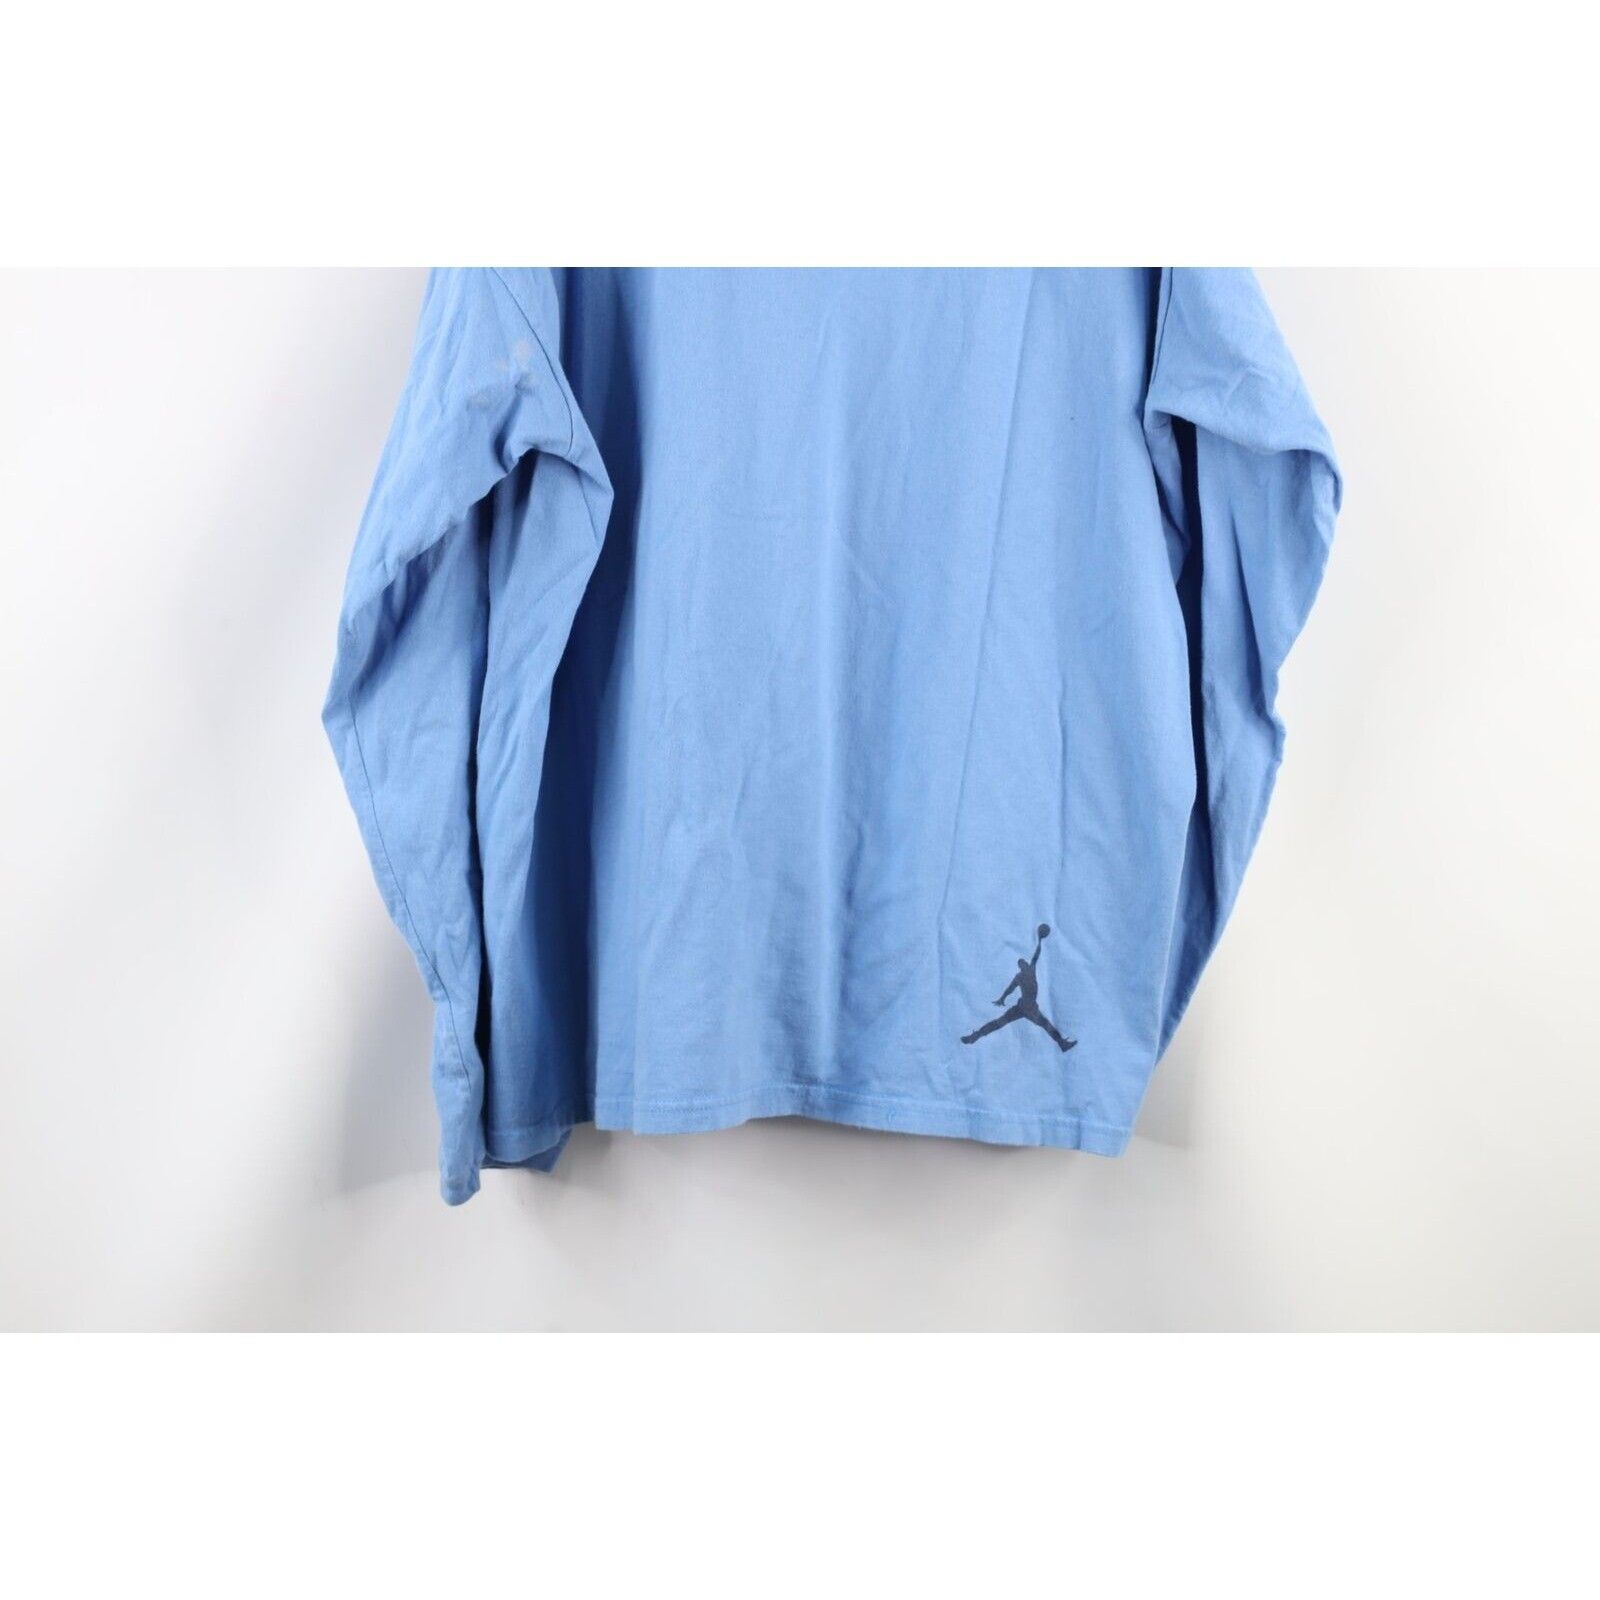 Nike Vintage Nike Air Jordan Faded Striped Center Logo T-Shirt Size US XL / EU 56 / 4 - 11 Preview